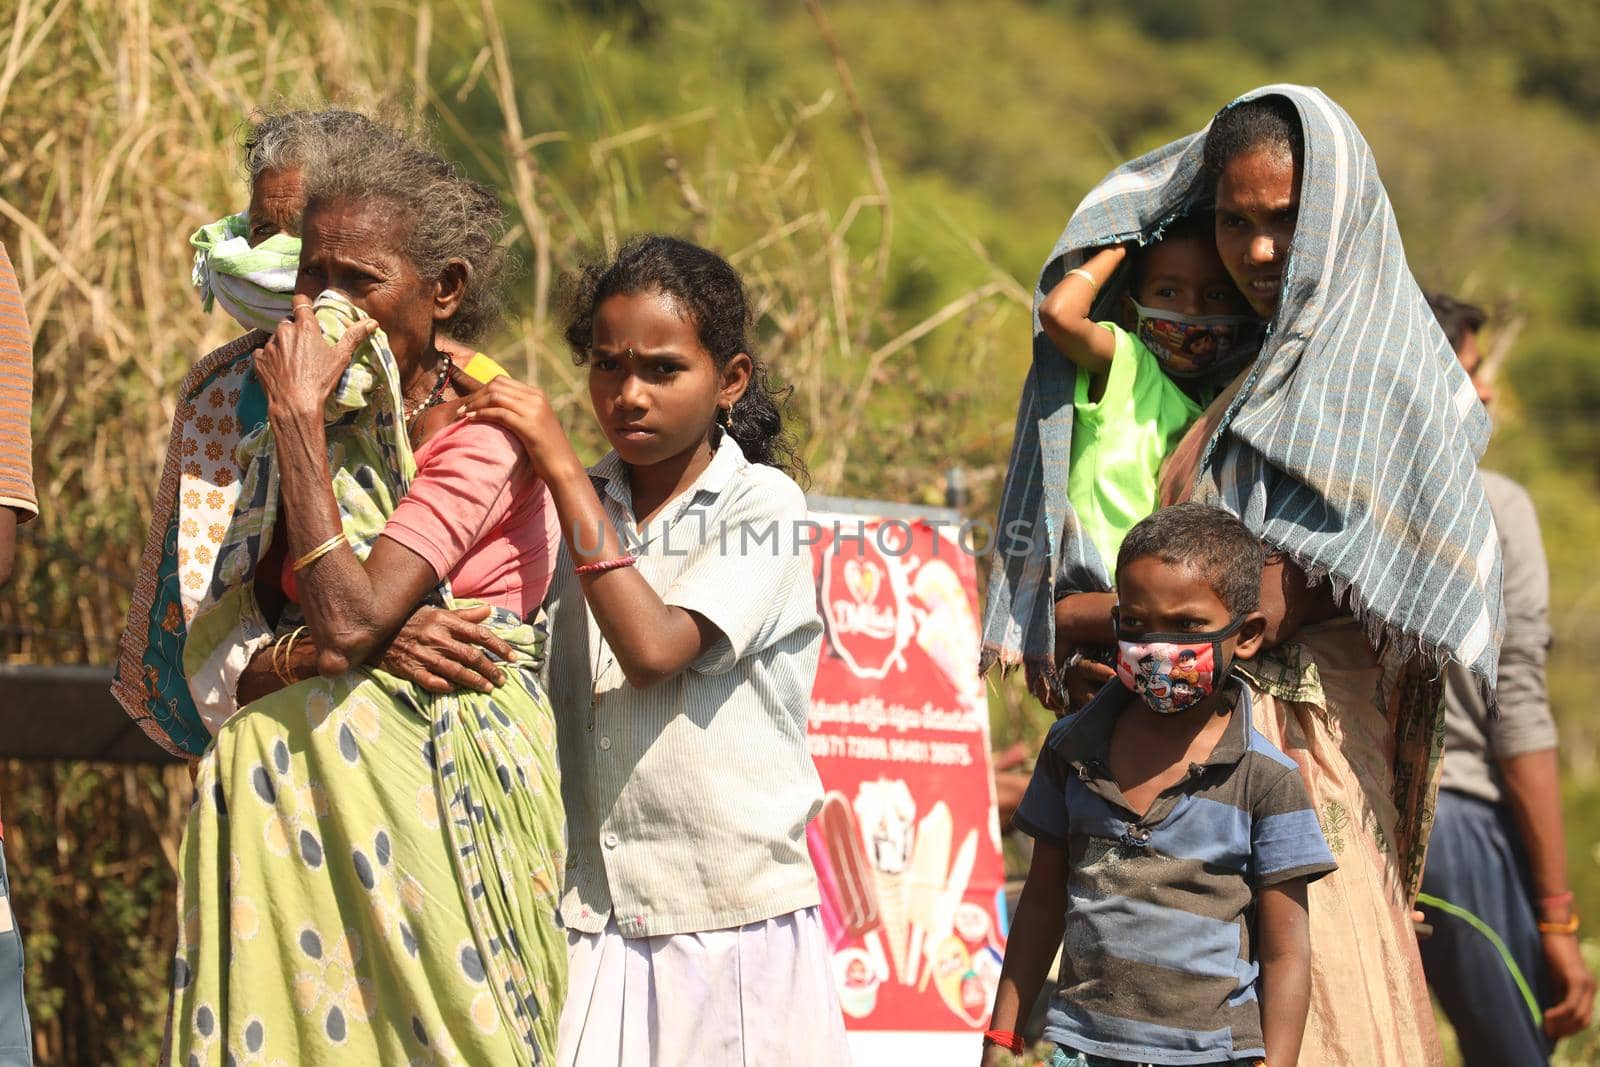 Indian Village People watching by rajastills